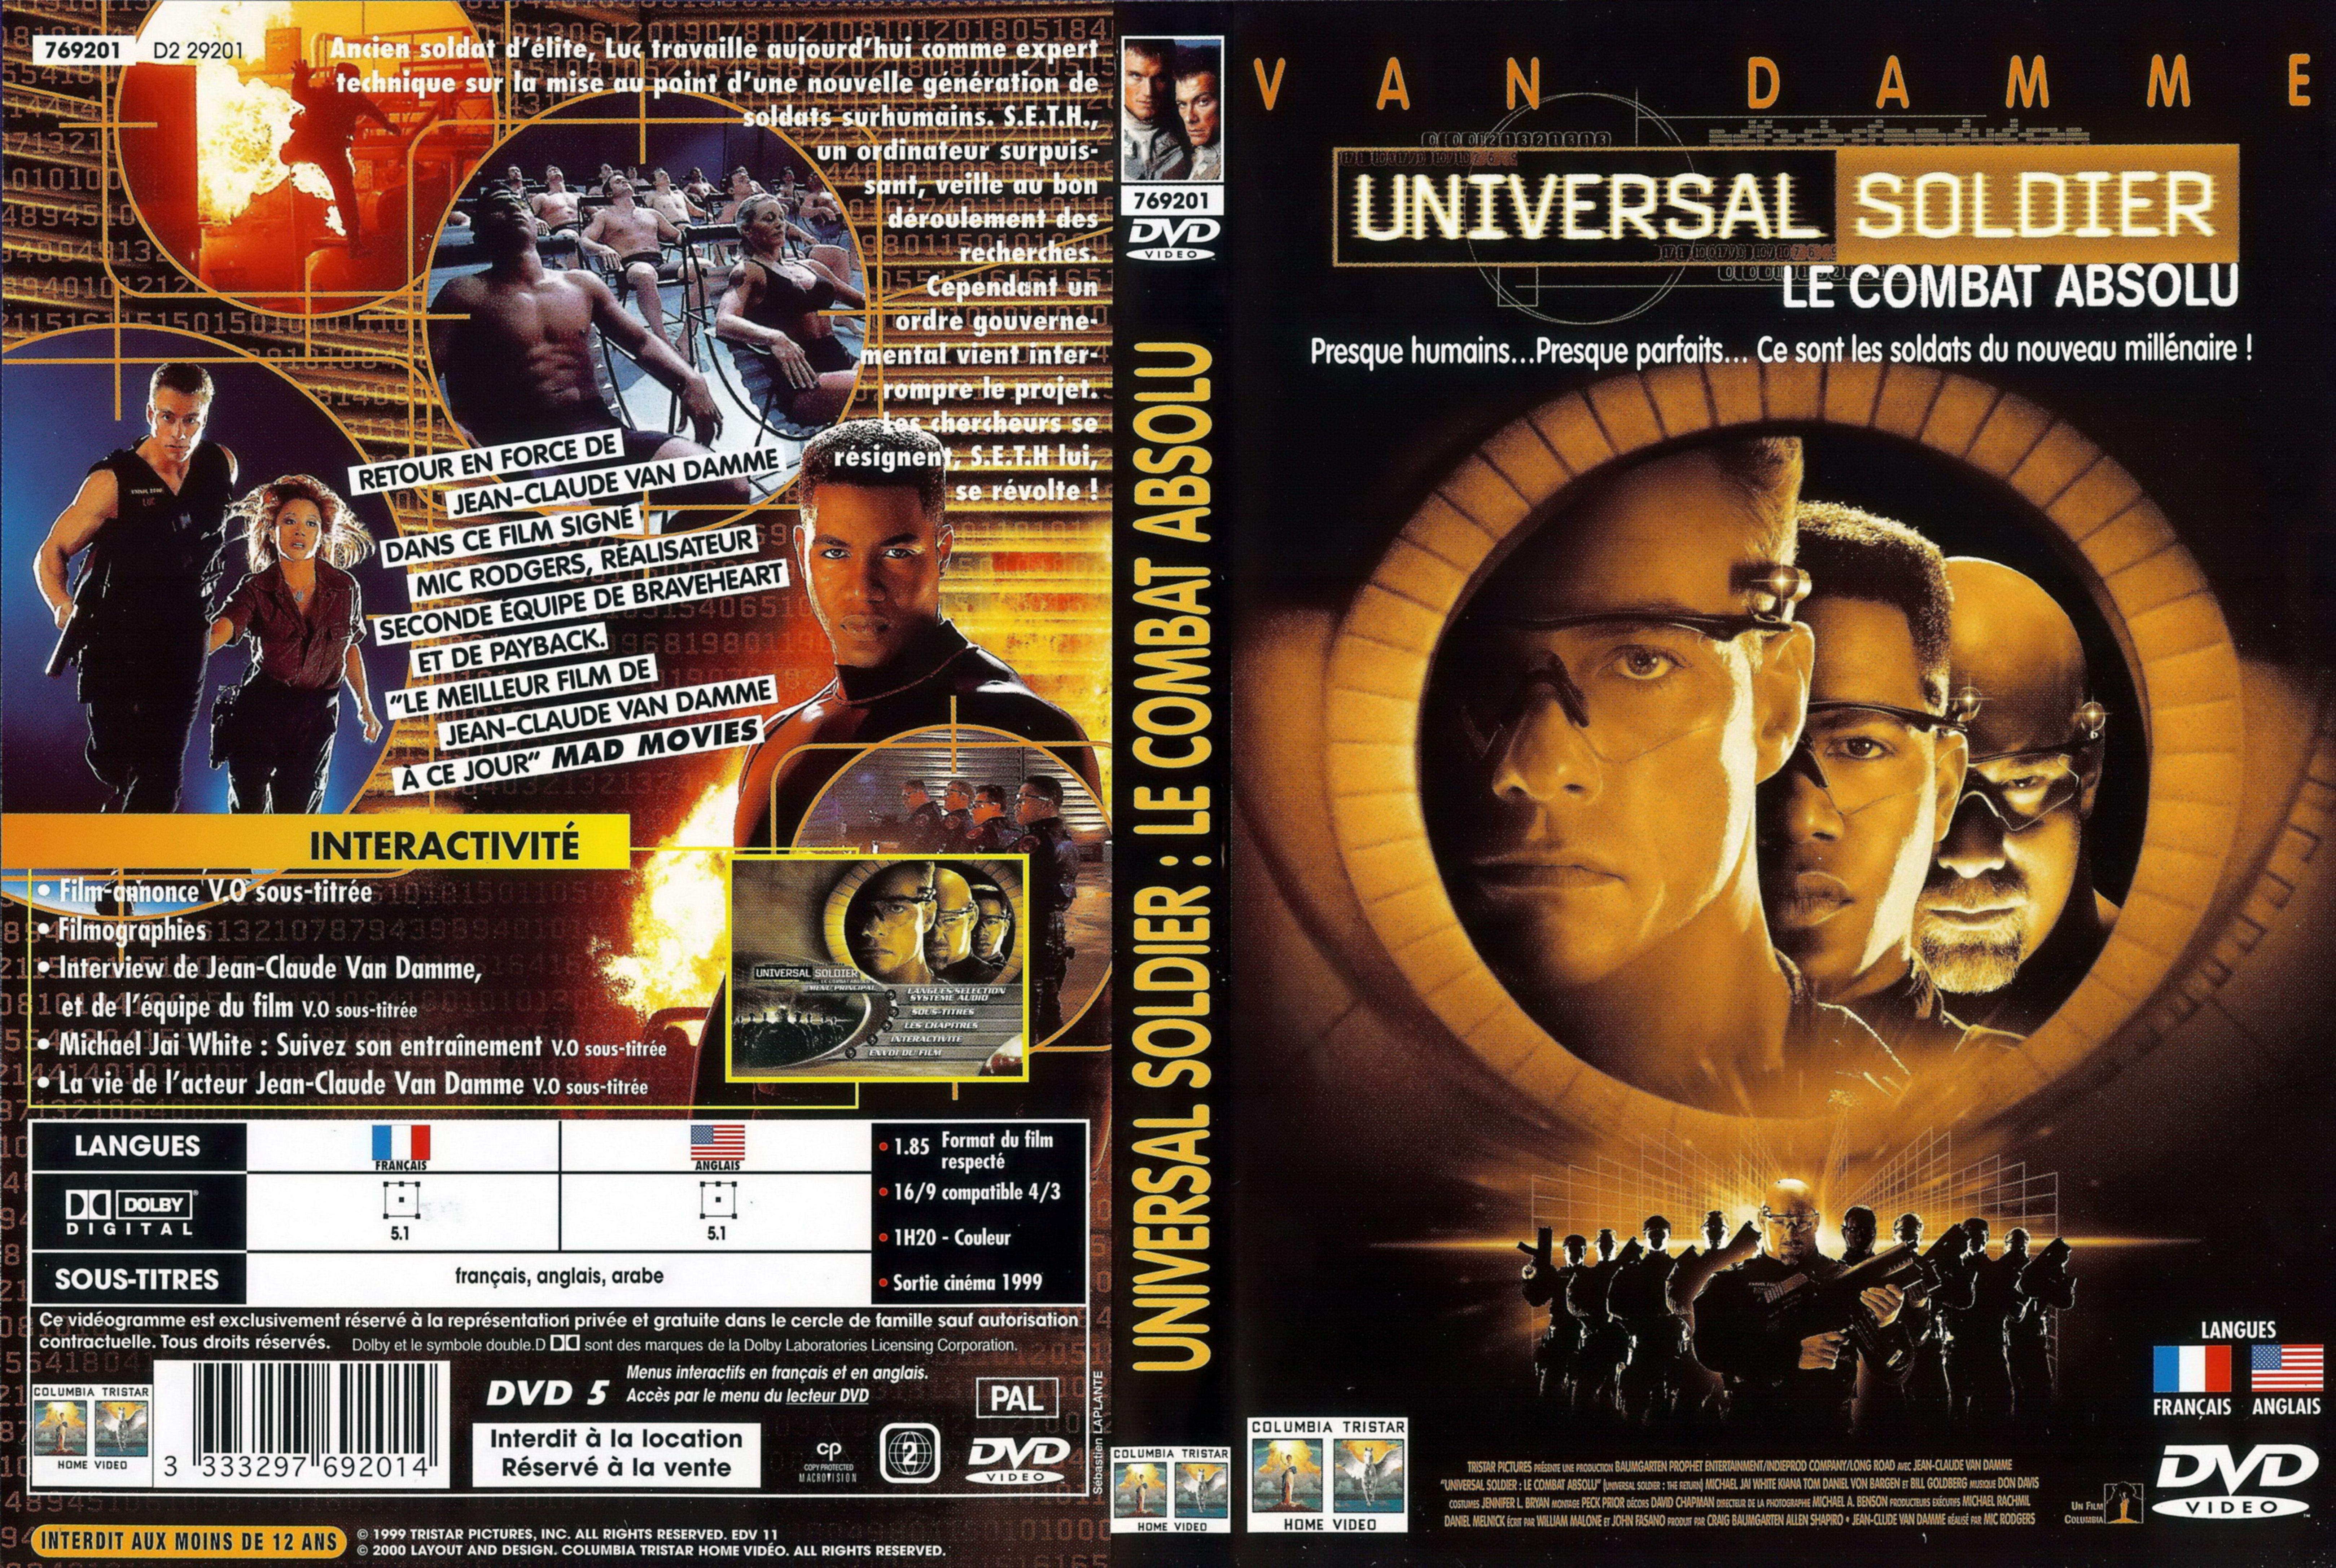 Jaquette DVD Universal soldier le combat absolu